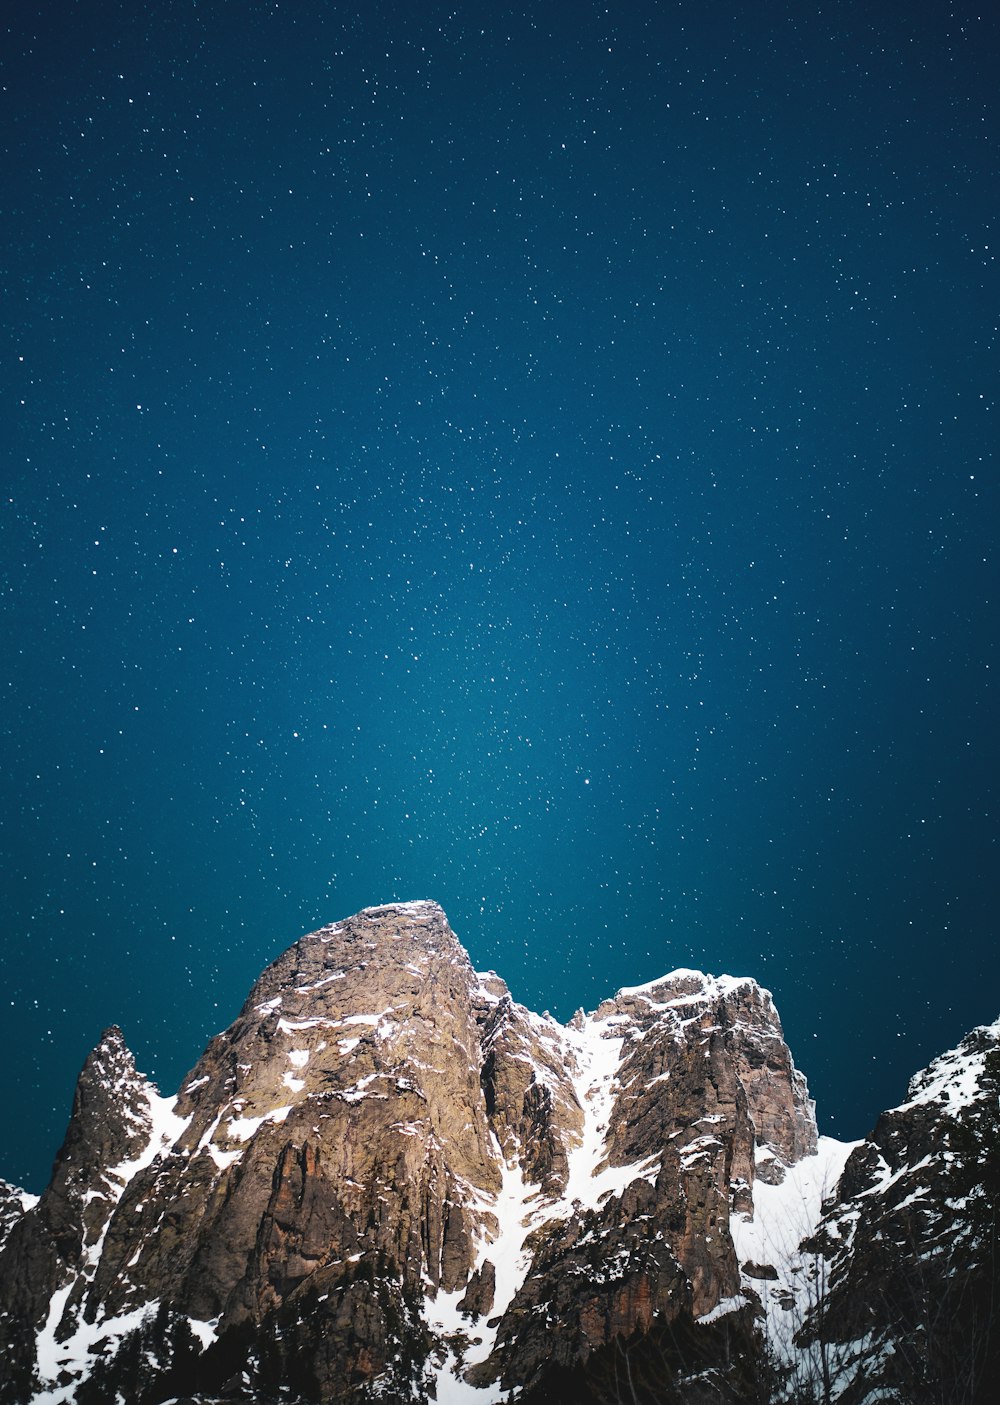 the night sky over a snowy mountain range